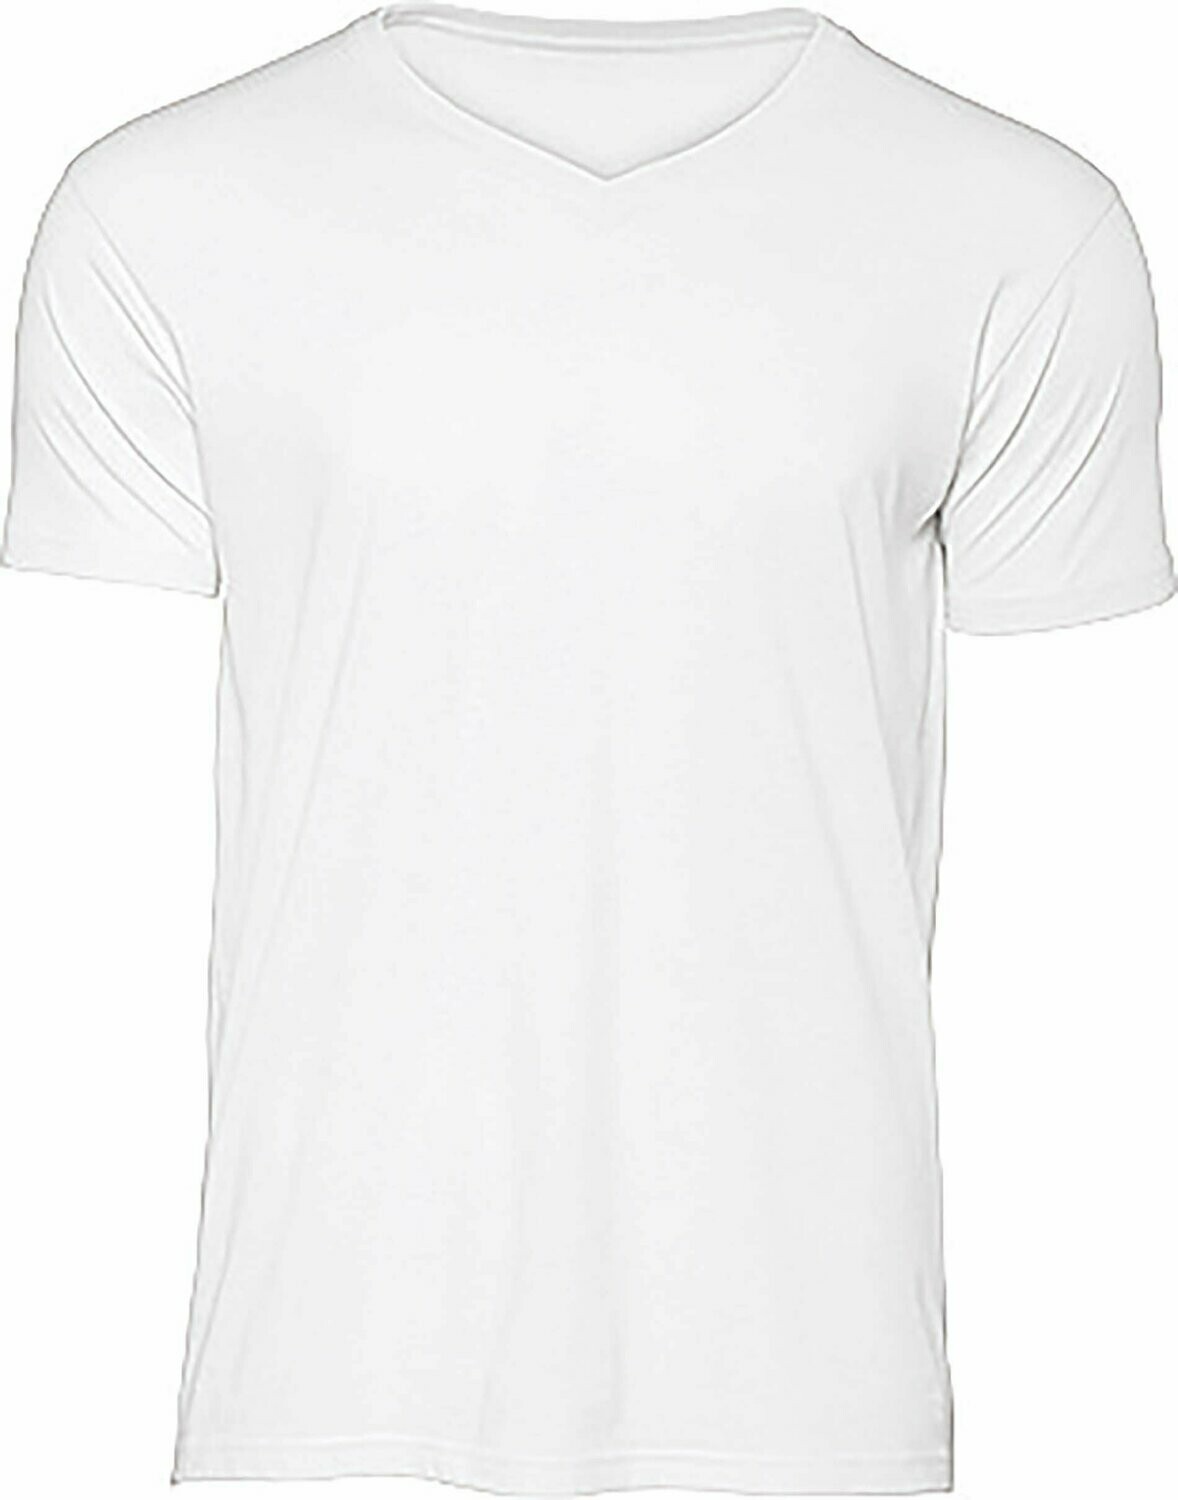 Tee-shirt B&C 100% Coton Bio Homme Col V 140gr, Coloris: Blanc, Taille: S